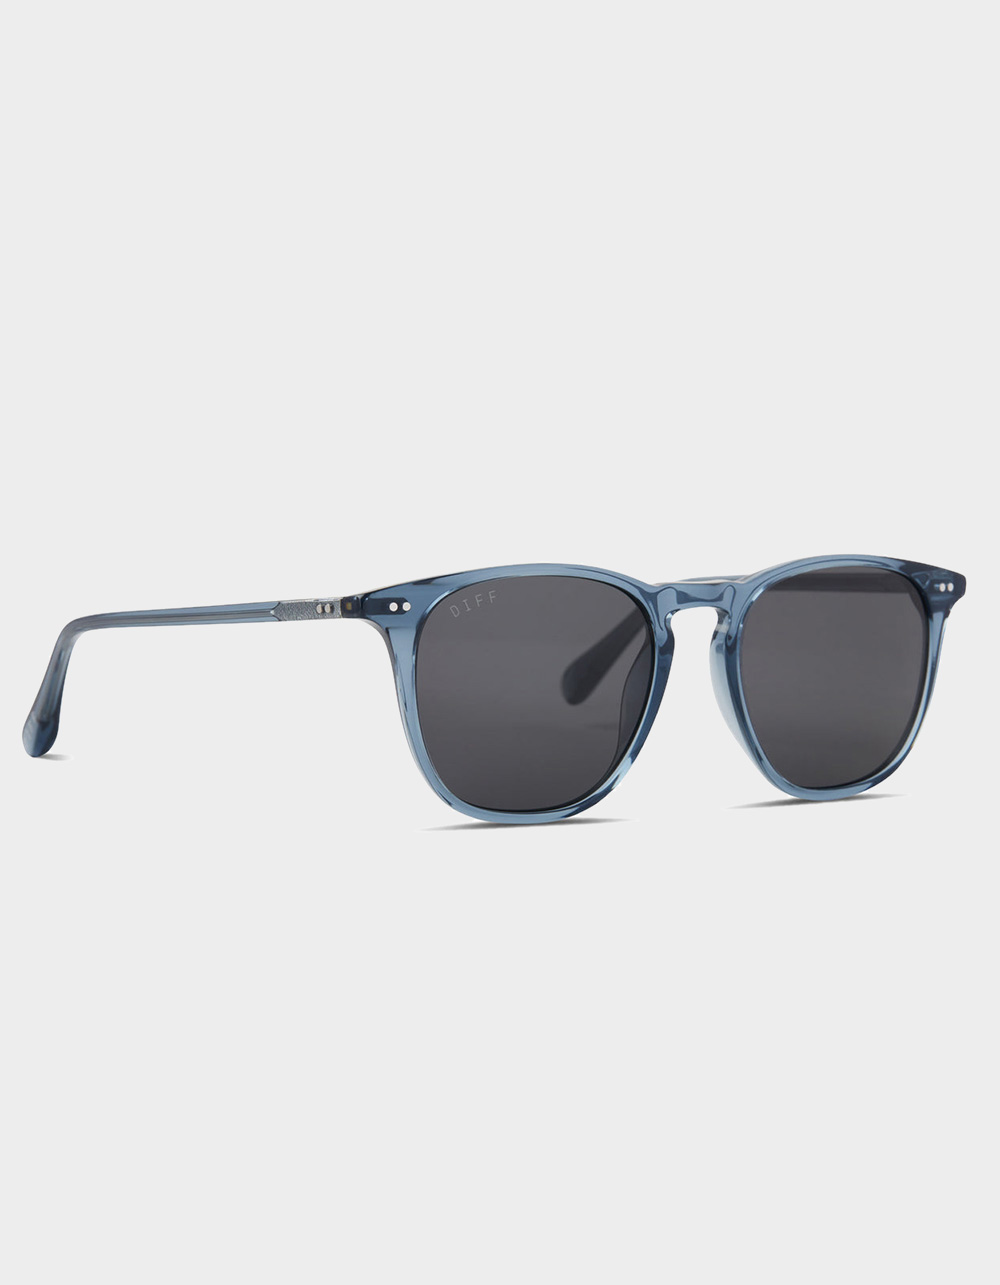 DIFF EYEWEAR Maxwell XI Polarized Sunglasses